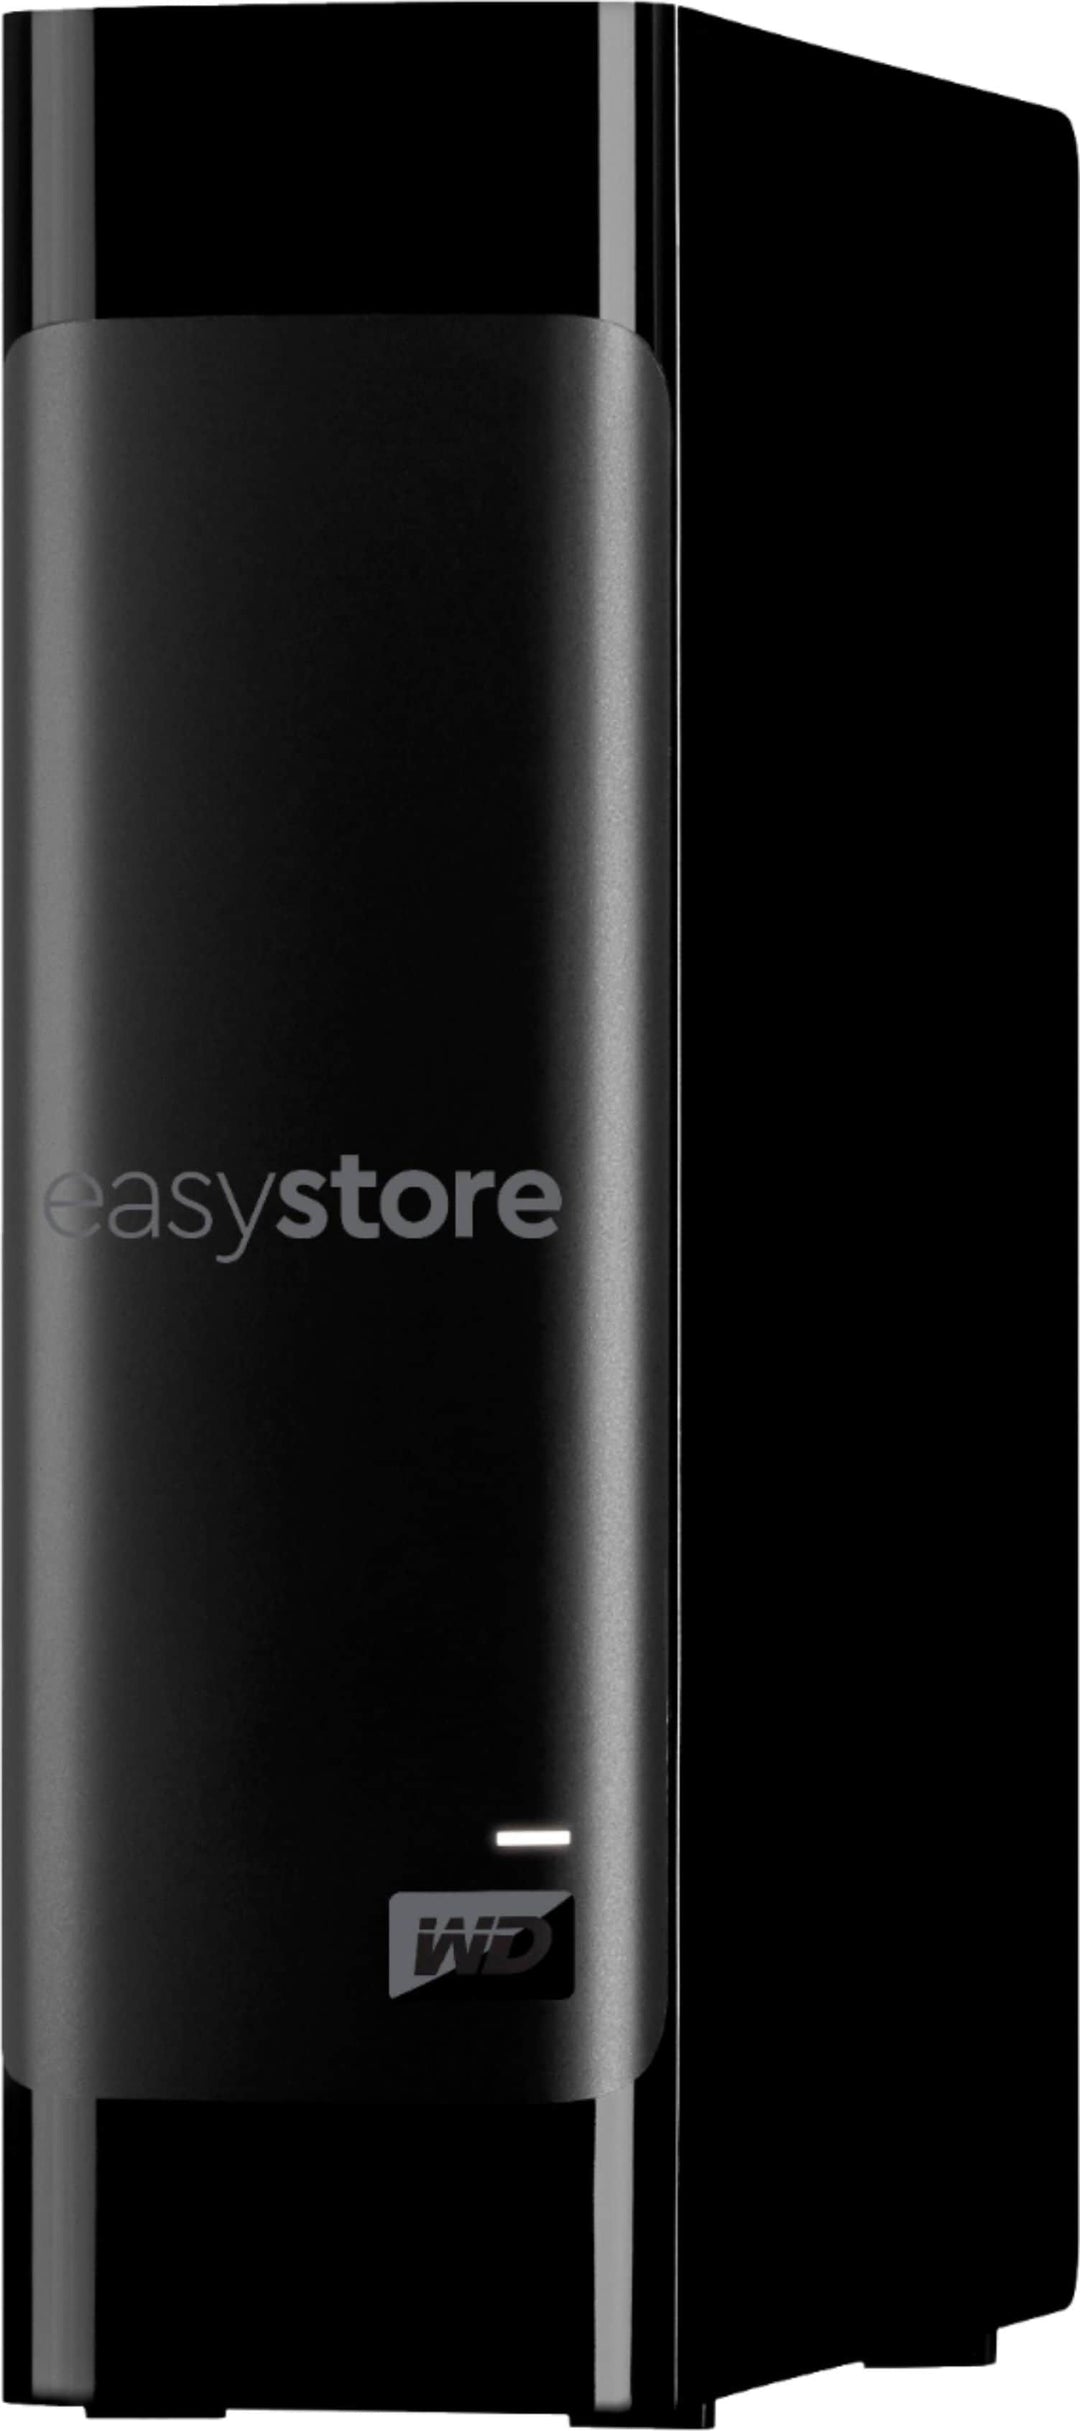 WD - easystore 8TB External USB 3.0 Hard Drive - Black_1